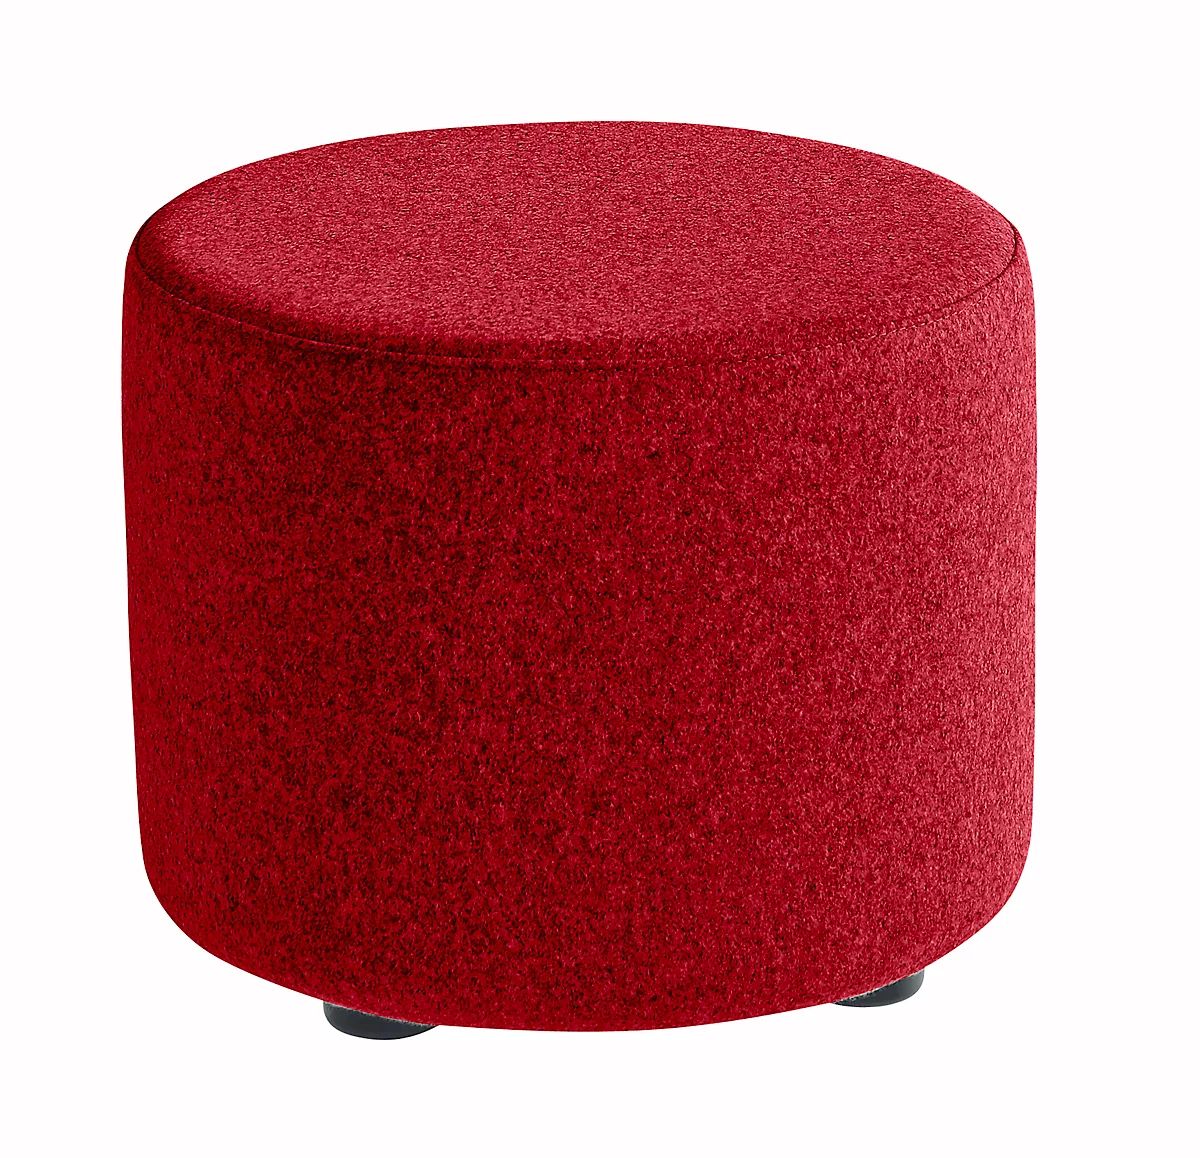 Taburete TAPA Round, madera contrachapada, acolchado, tapizado de lana virgen, rojo